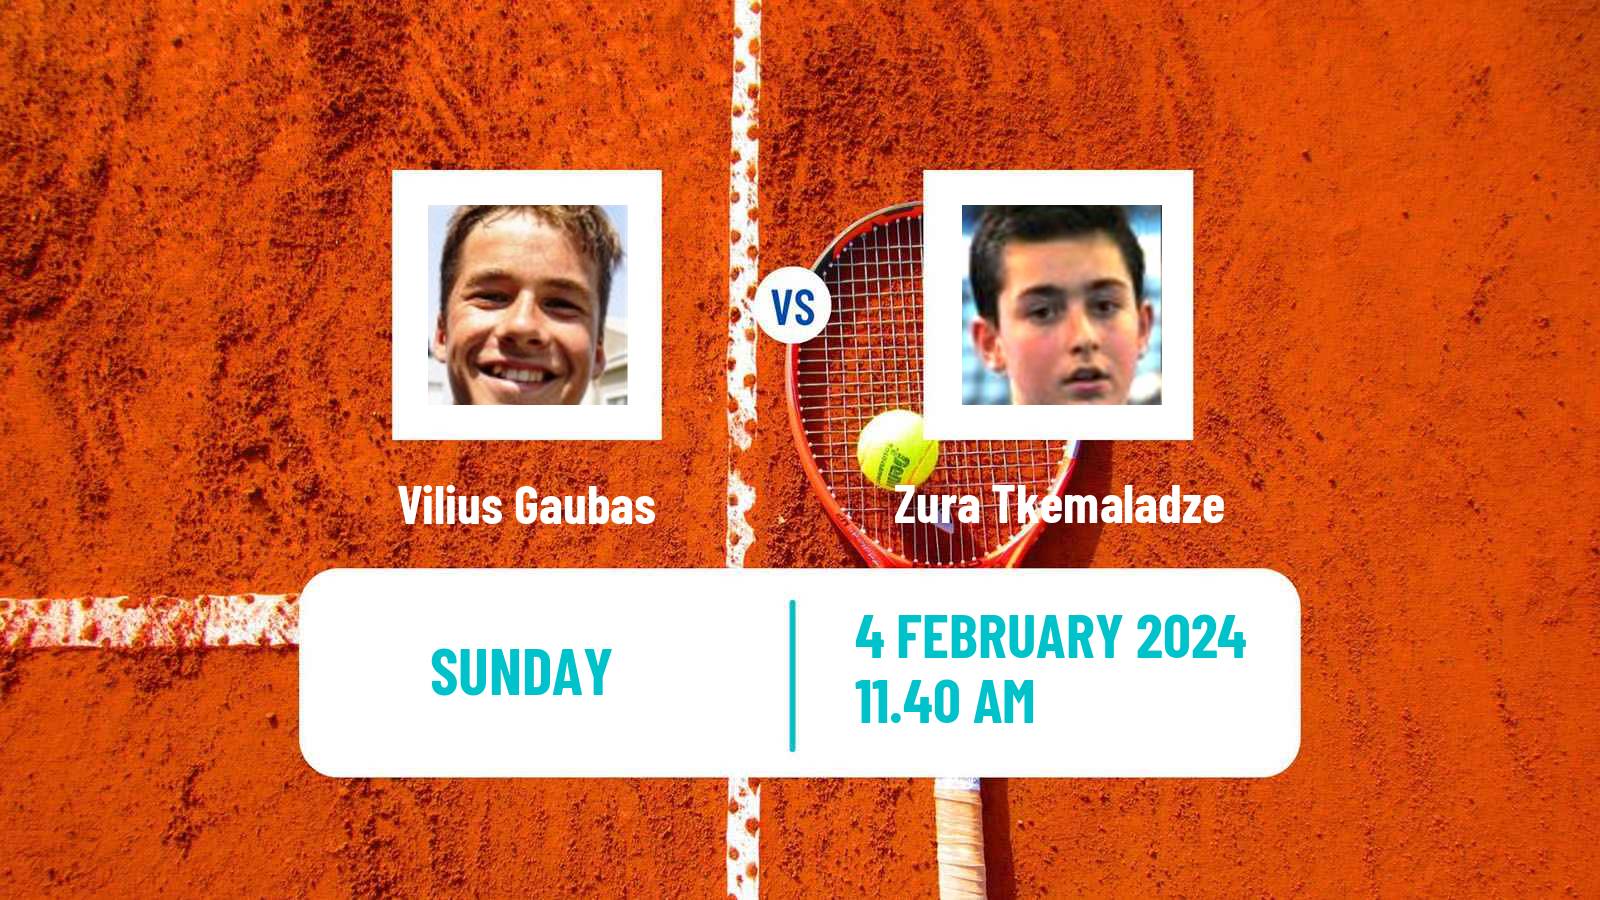 Tennis Davis Cup World Group I Vilius Gaubas - Zura Tkemaladze